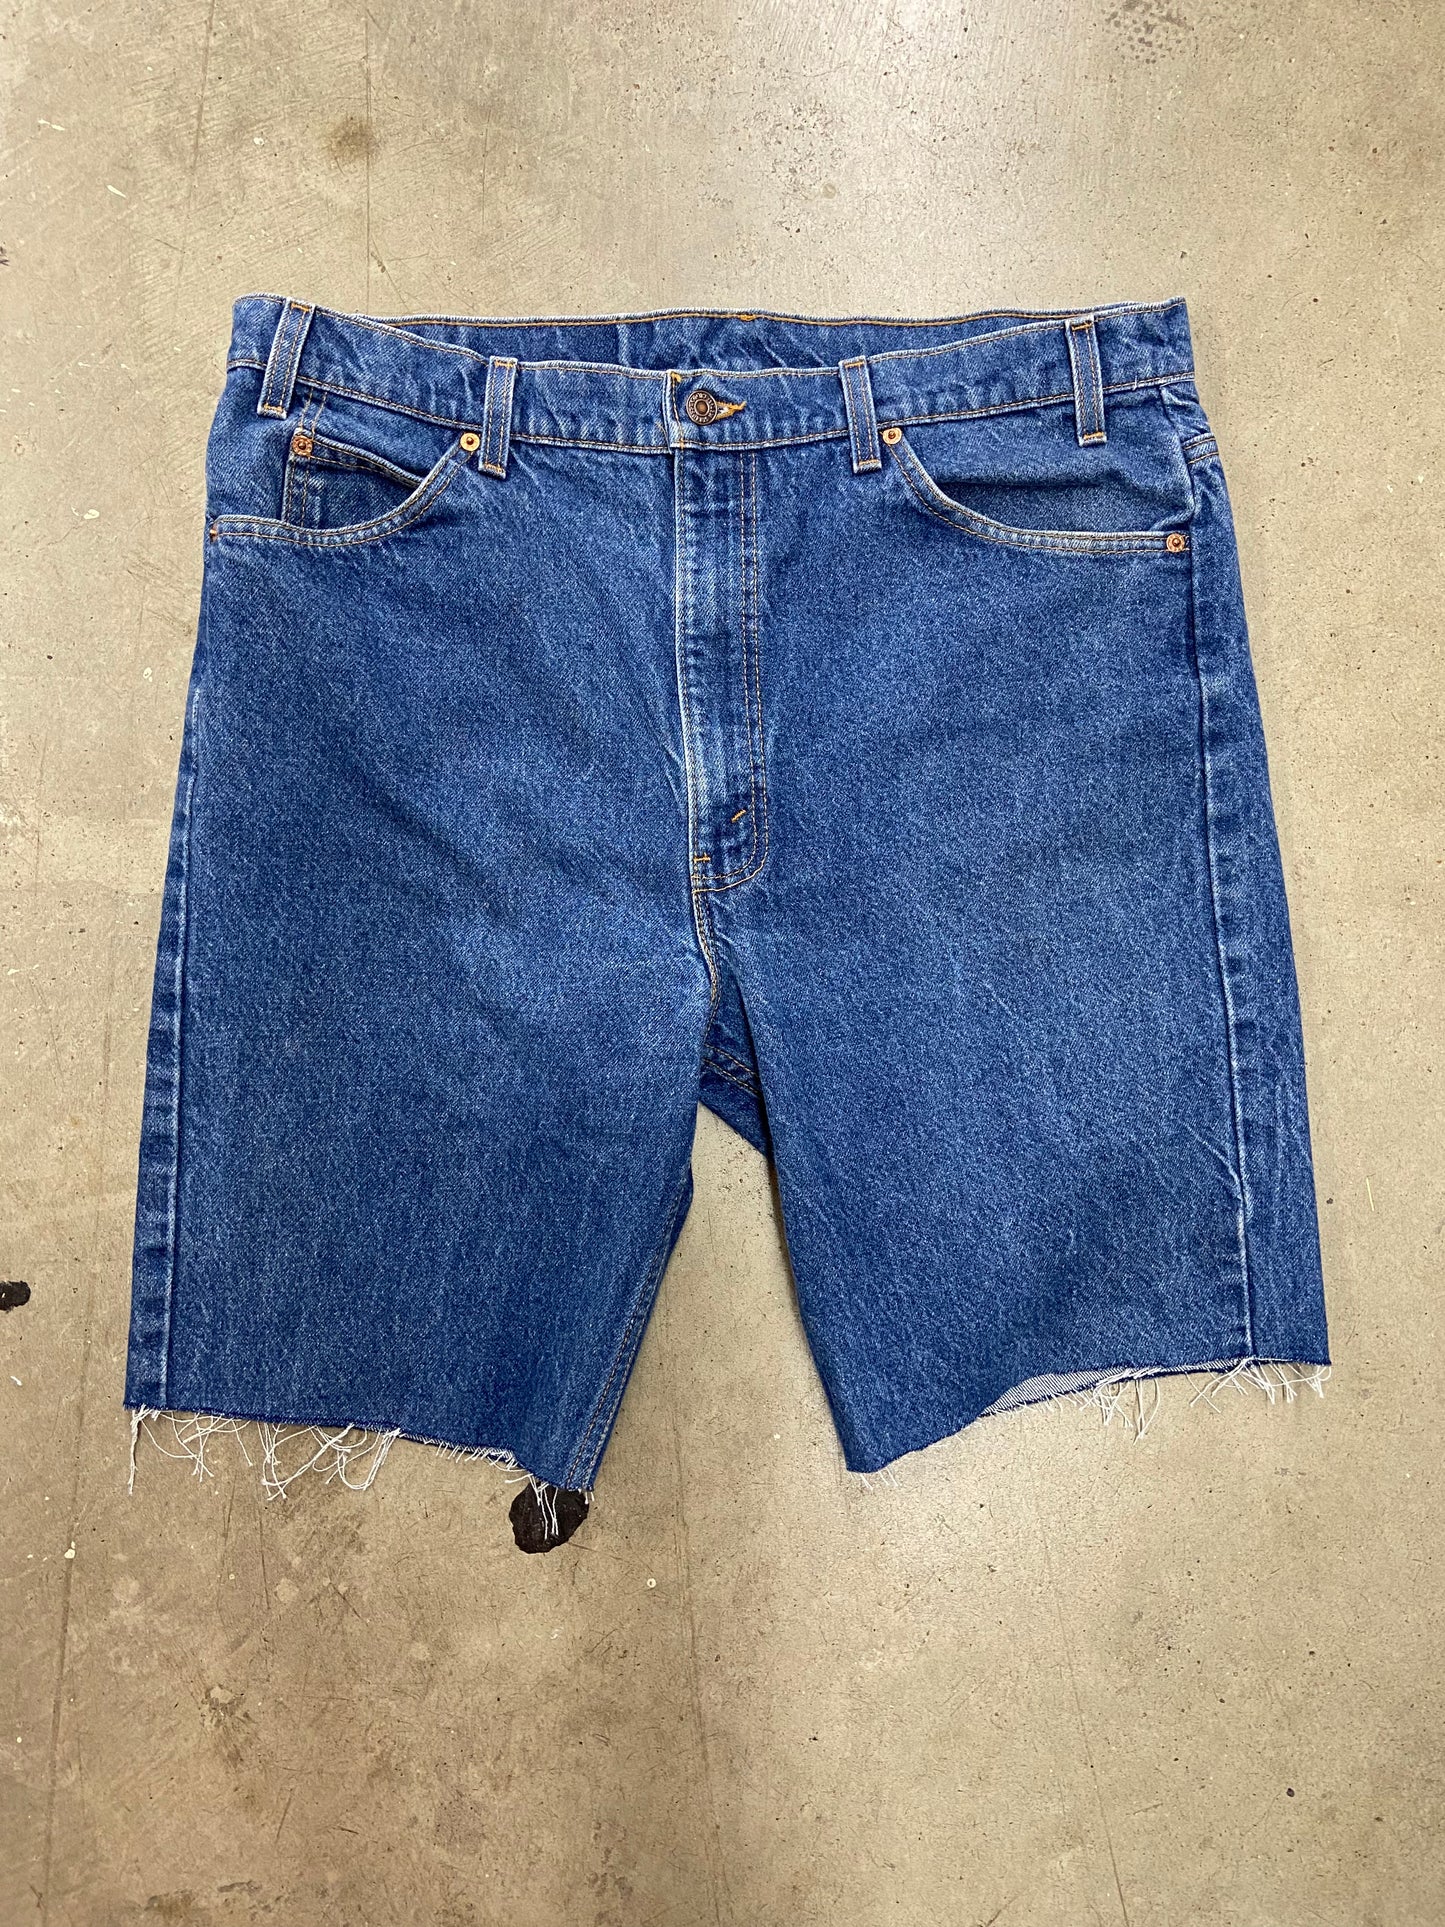 VTG Orange Tab Levi's Blue Denim Jeans Sz 40x30